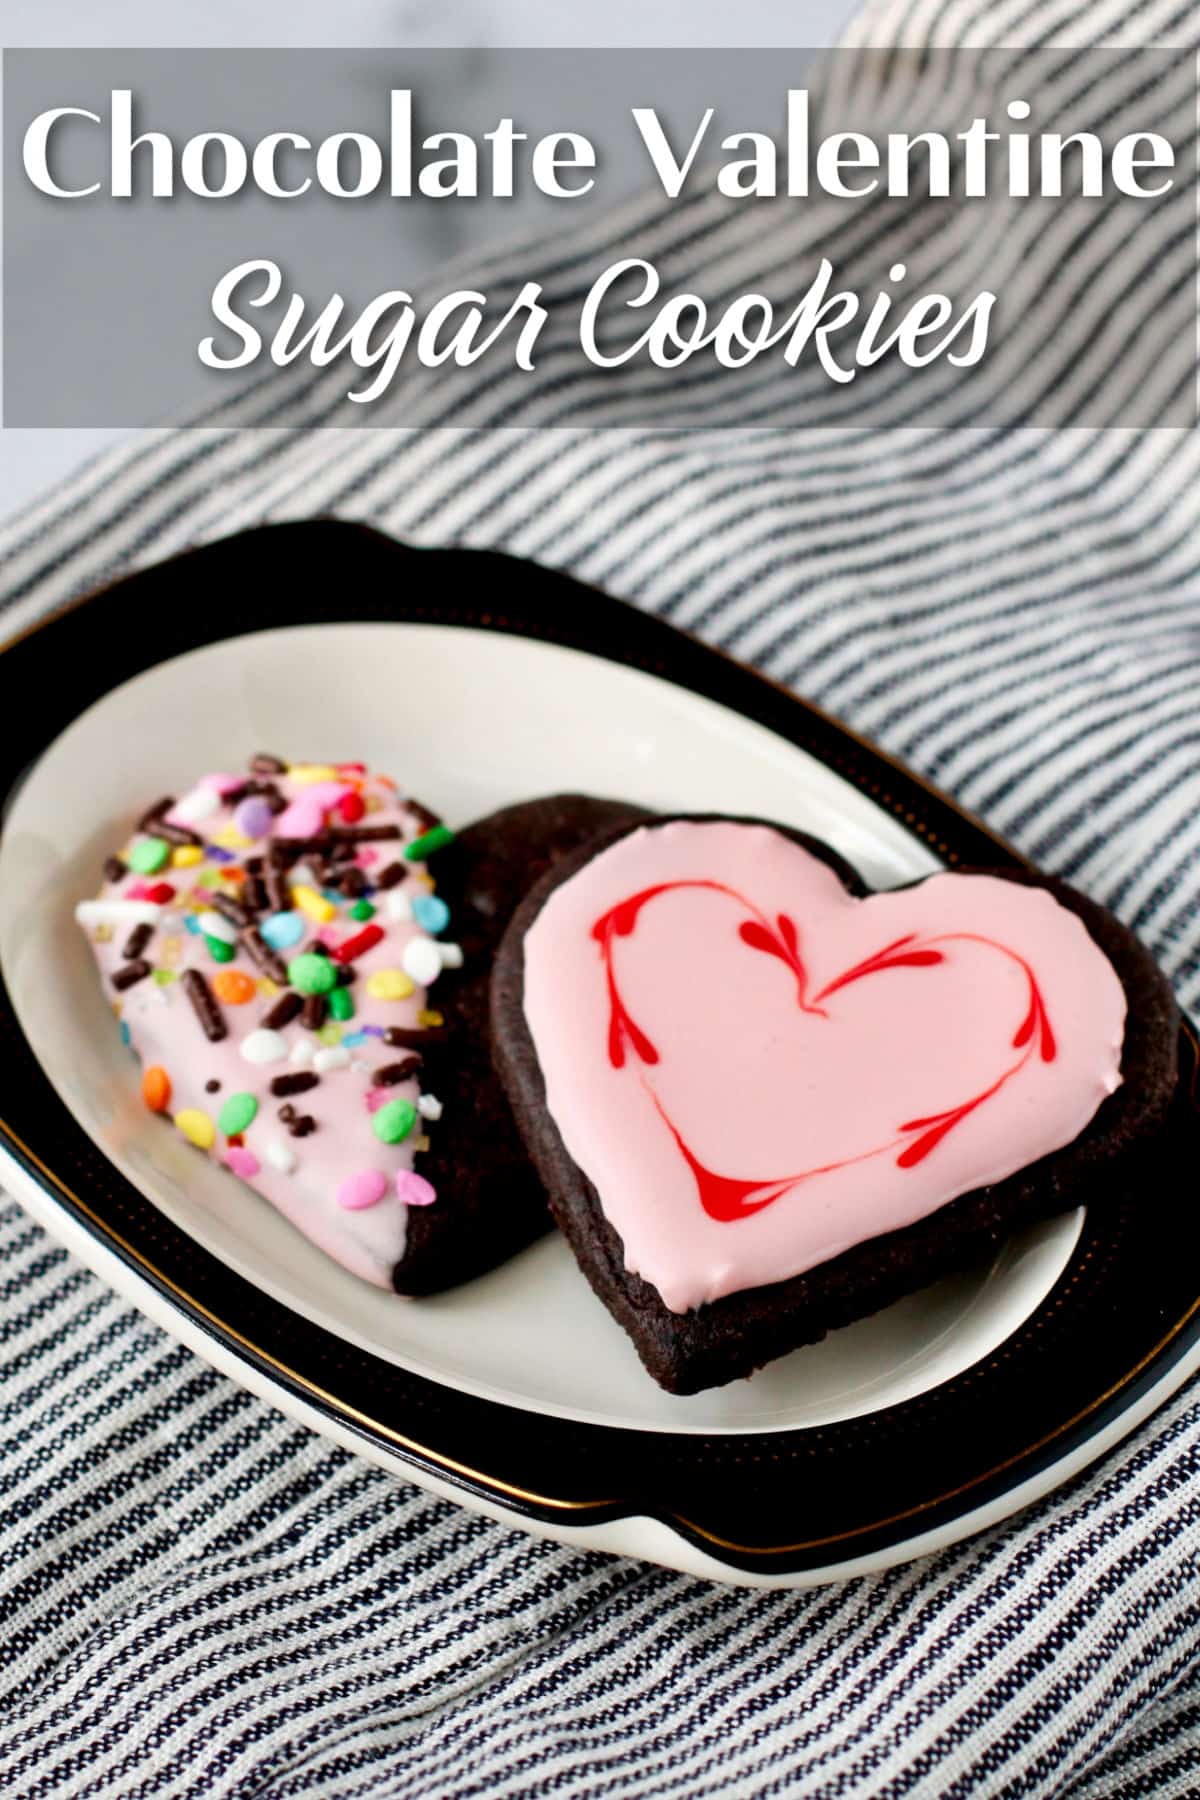 Two Chocolate Valentine Sugar Cookies.